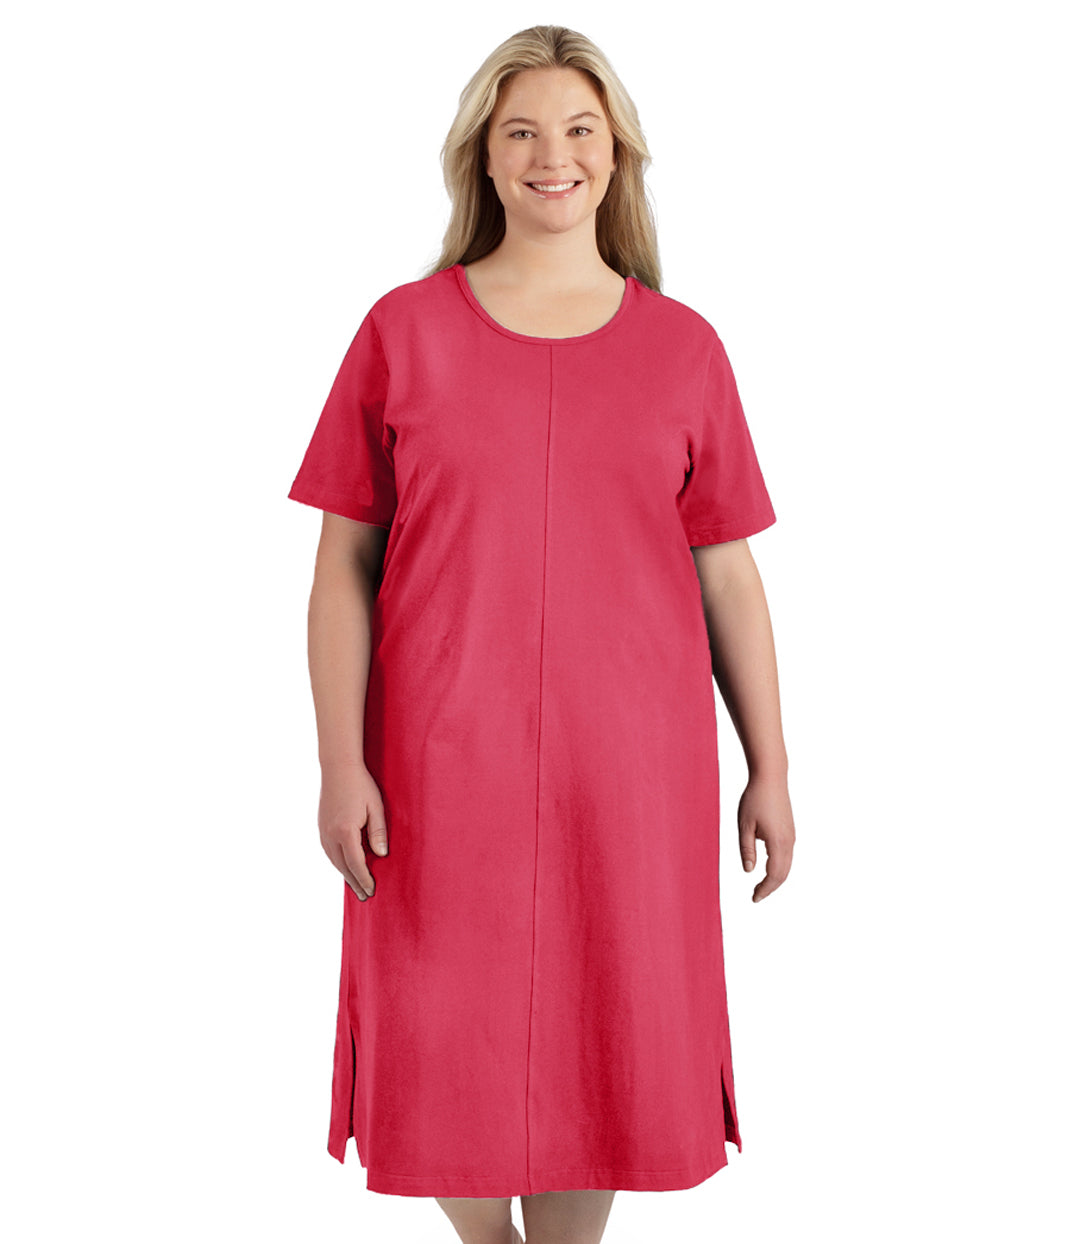  Plus Size Nursing Dress